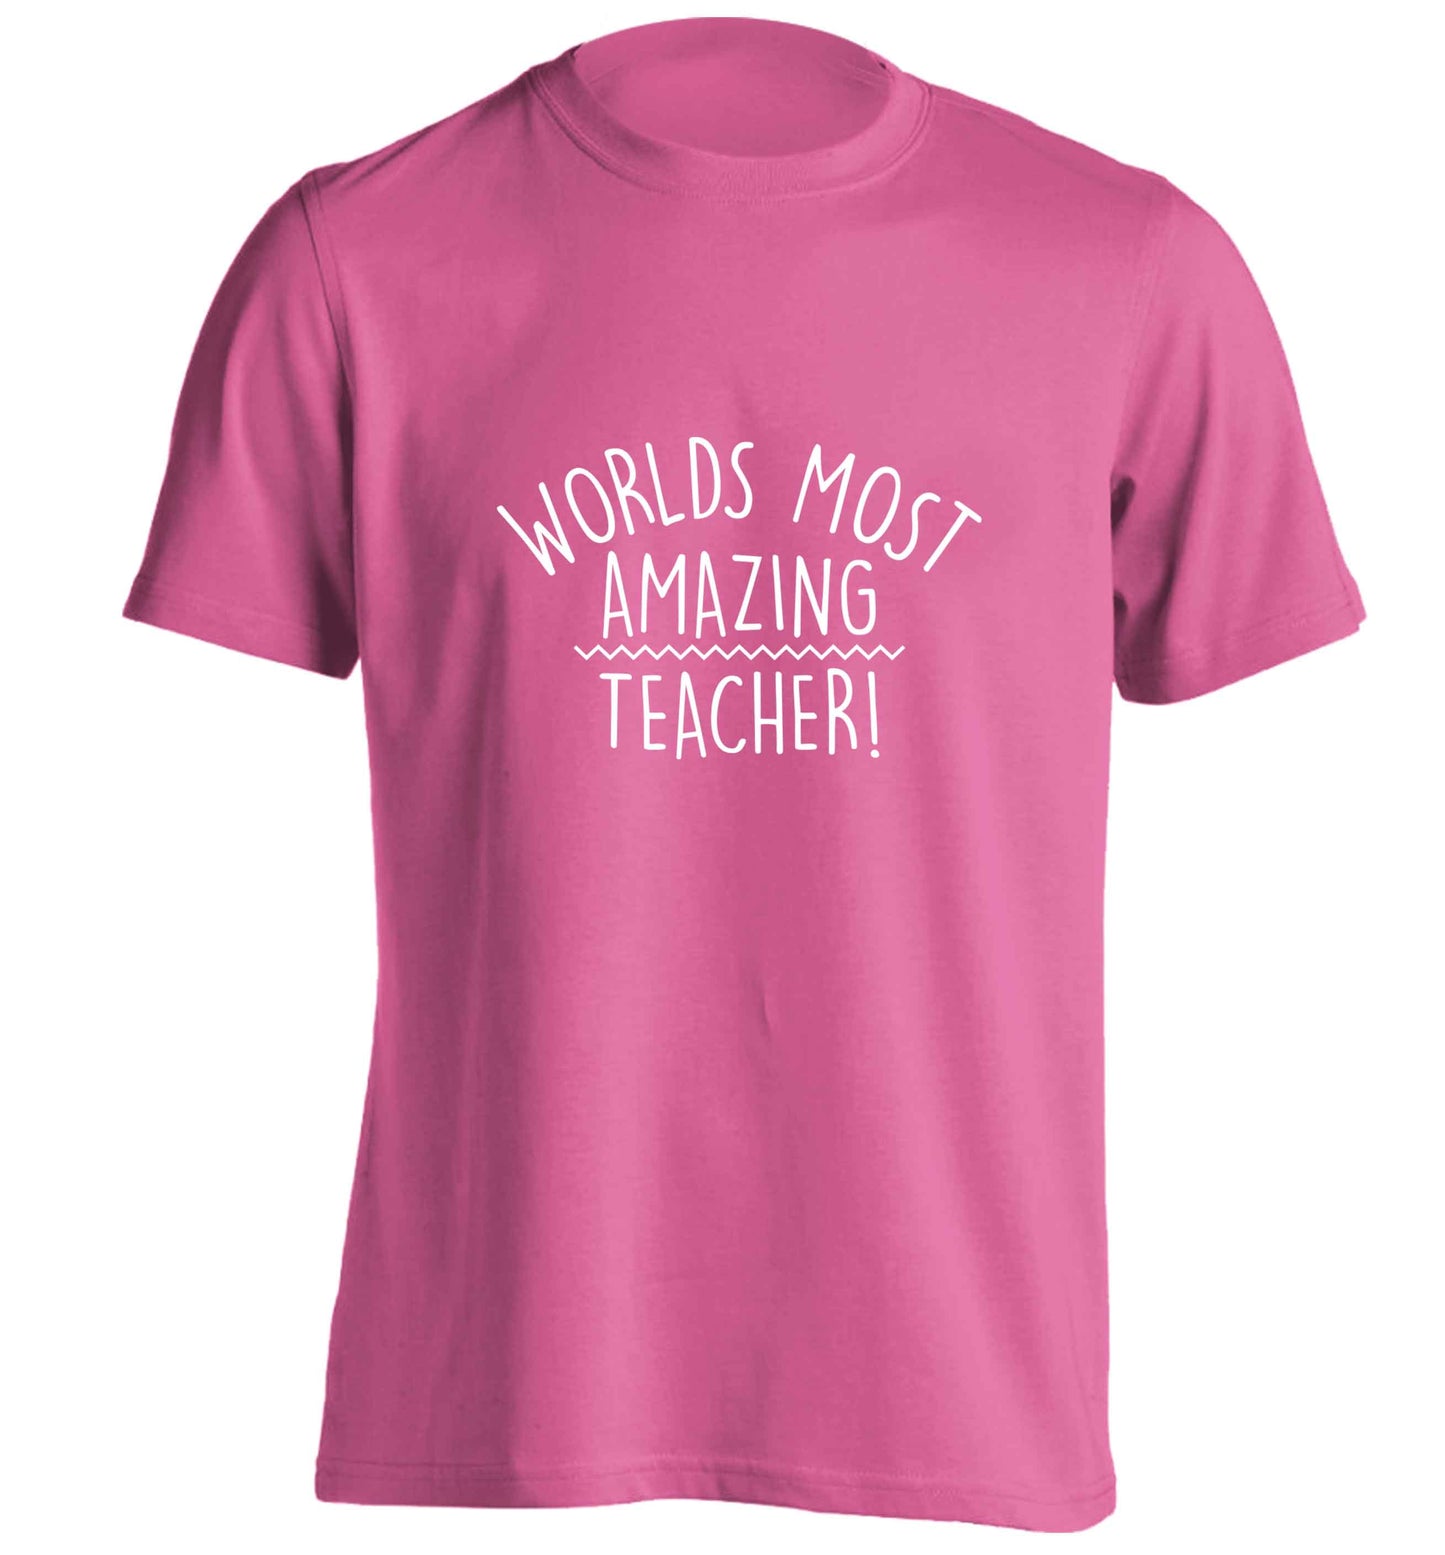 Worlds most amazing teacher adults unisex pink Tshirt 2XL